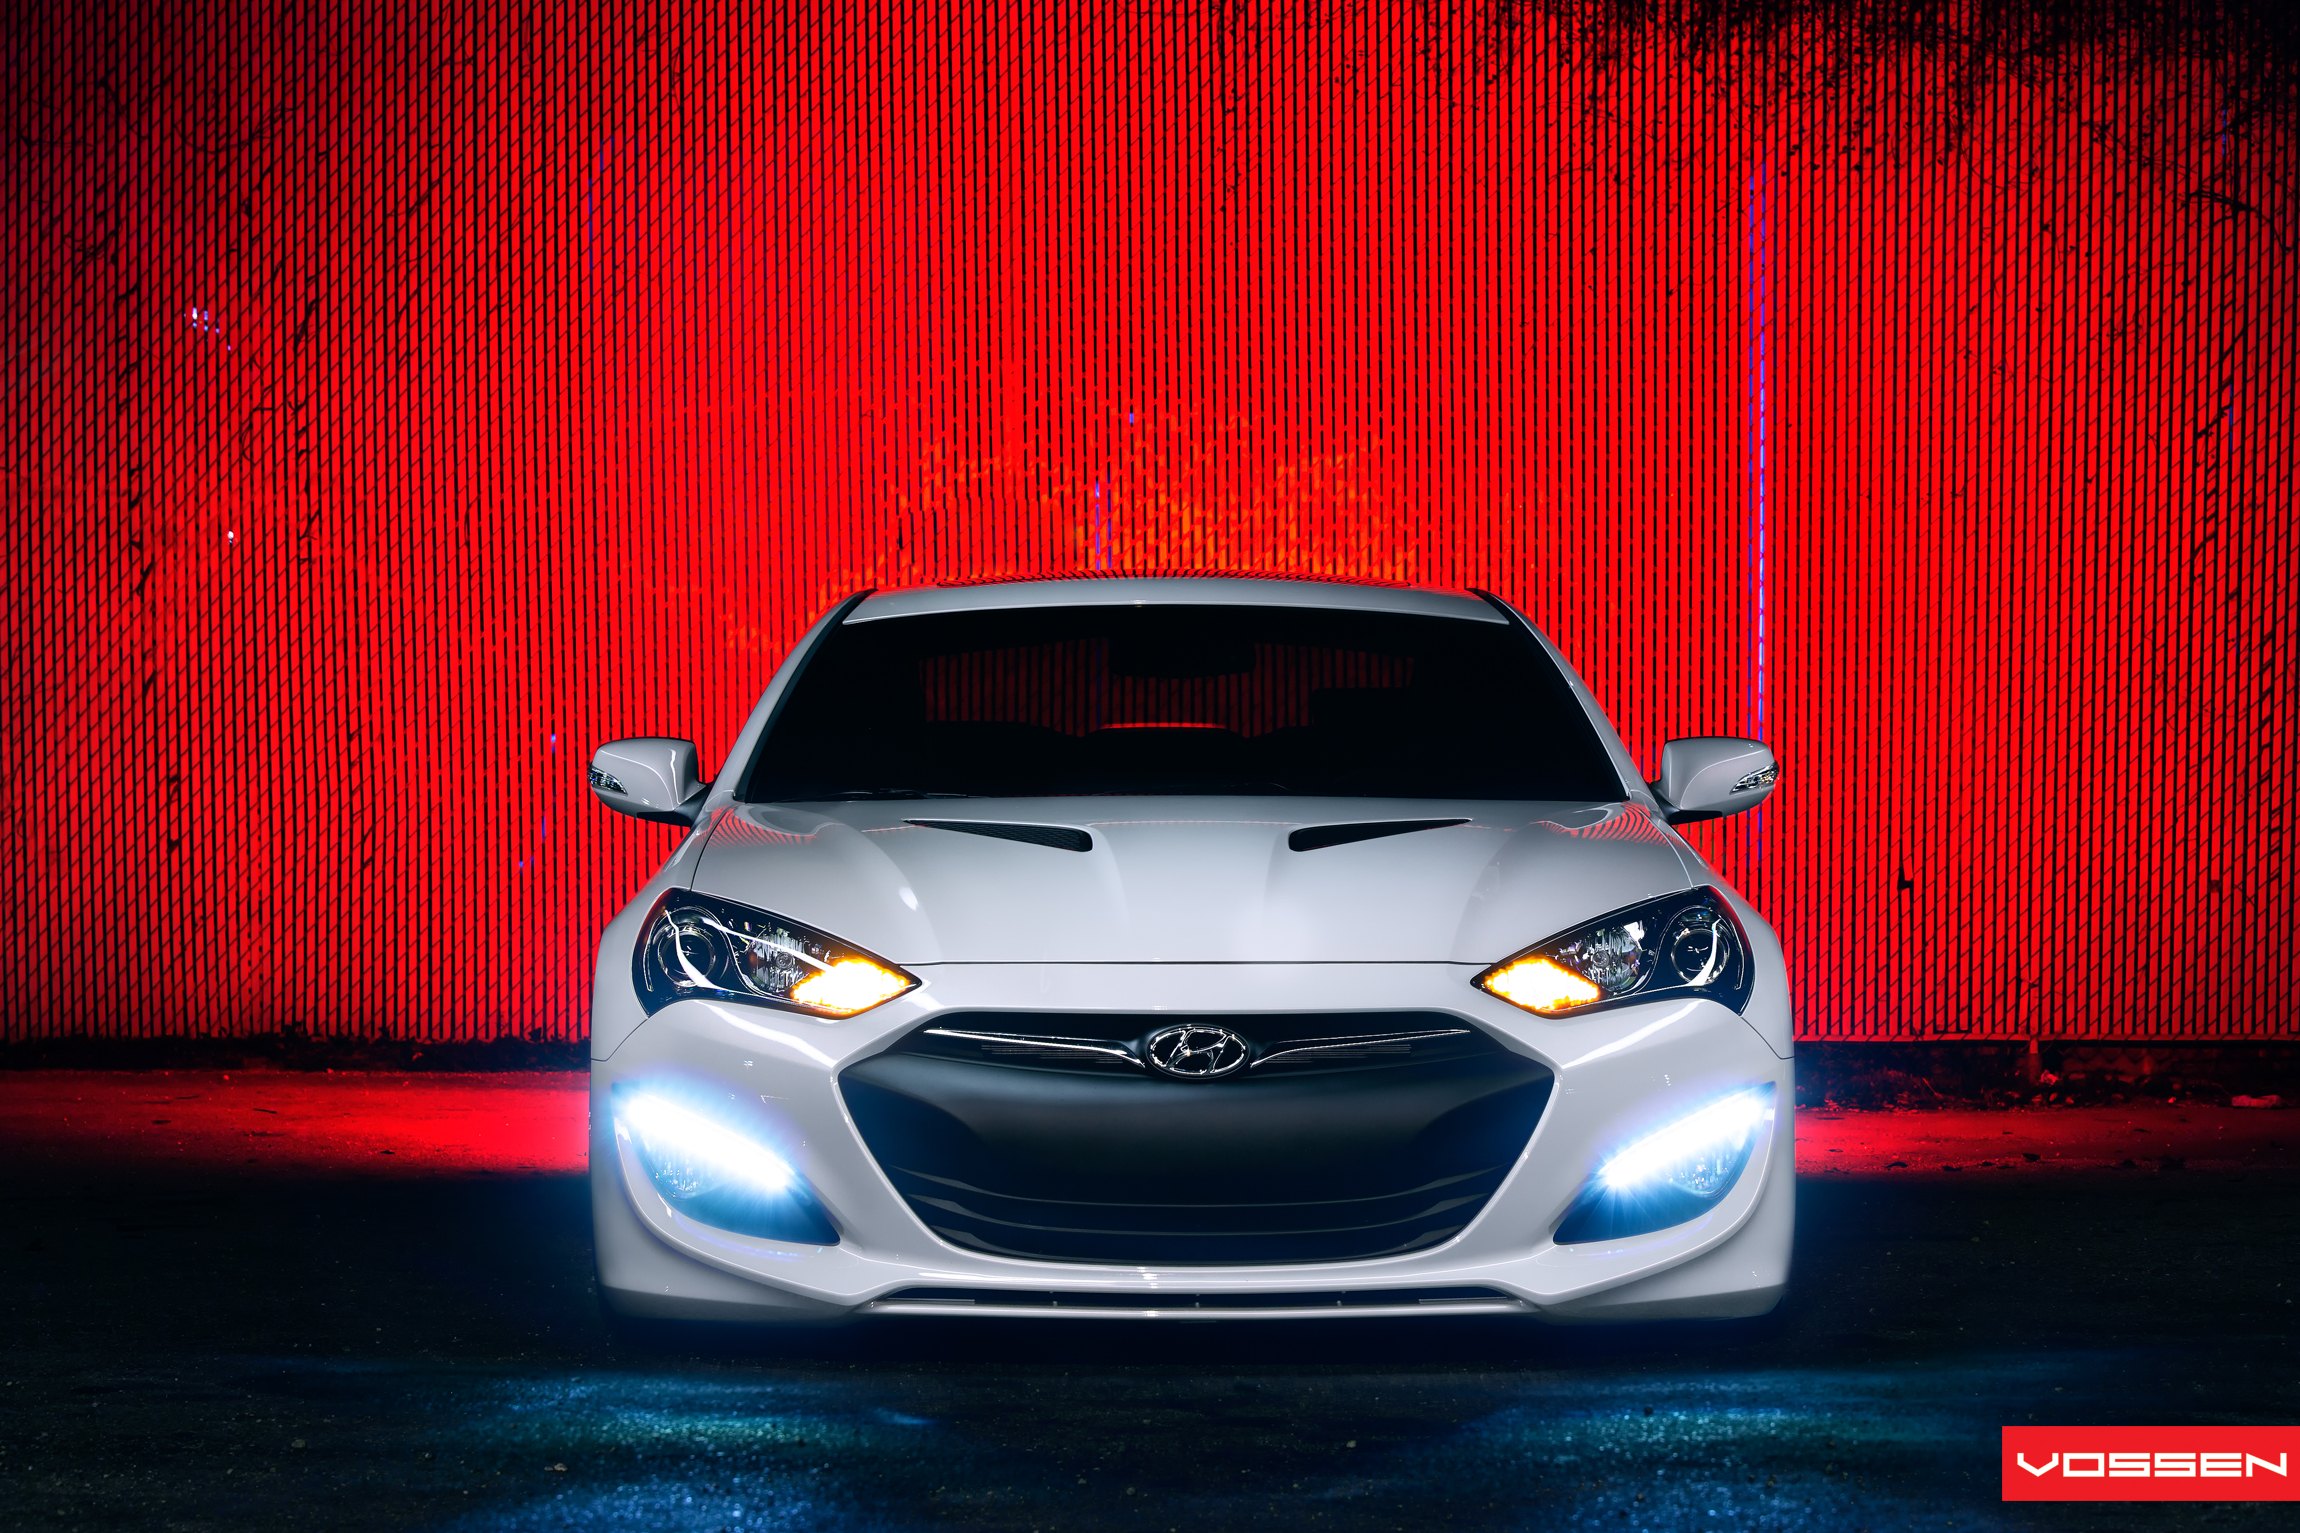 White LED Fog Lights on Hyundai Genesis Coupe - Photo by Vossen